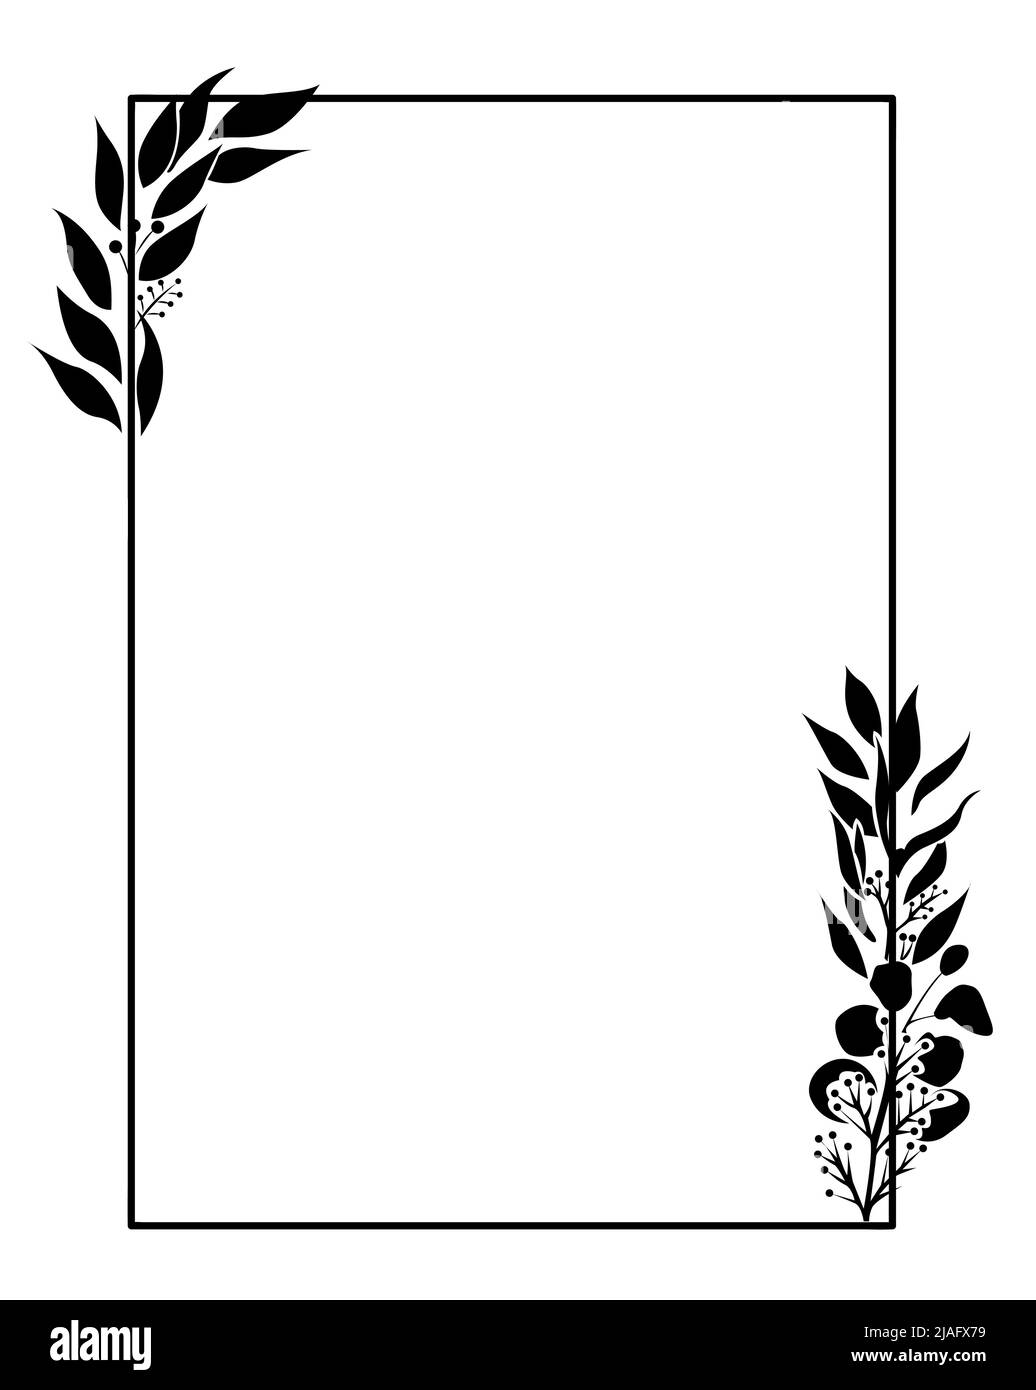 Floral Rectangular Frame or Border design isolated on white background  - vector illustration Stock Vector